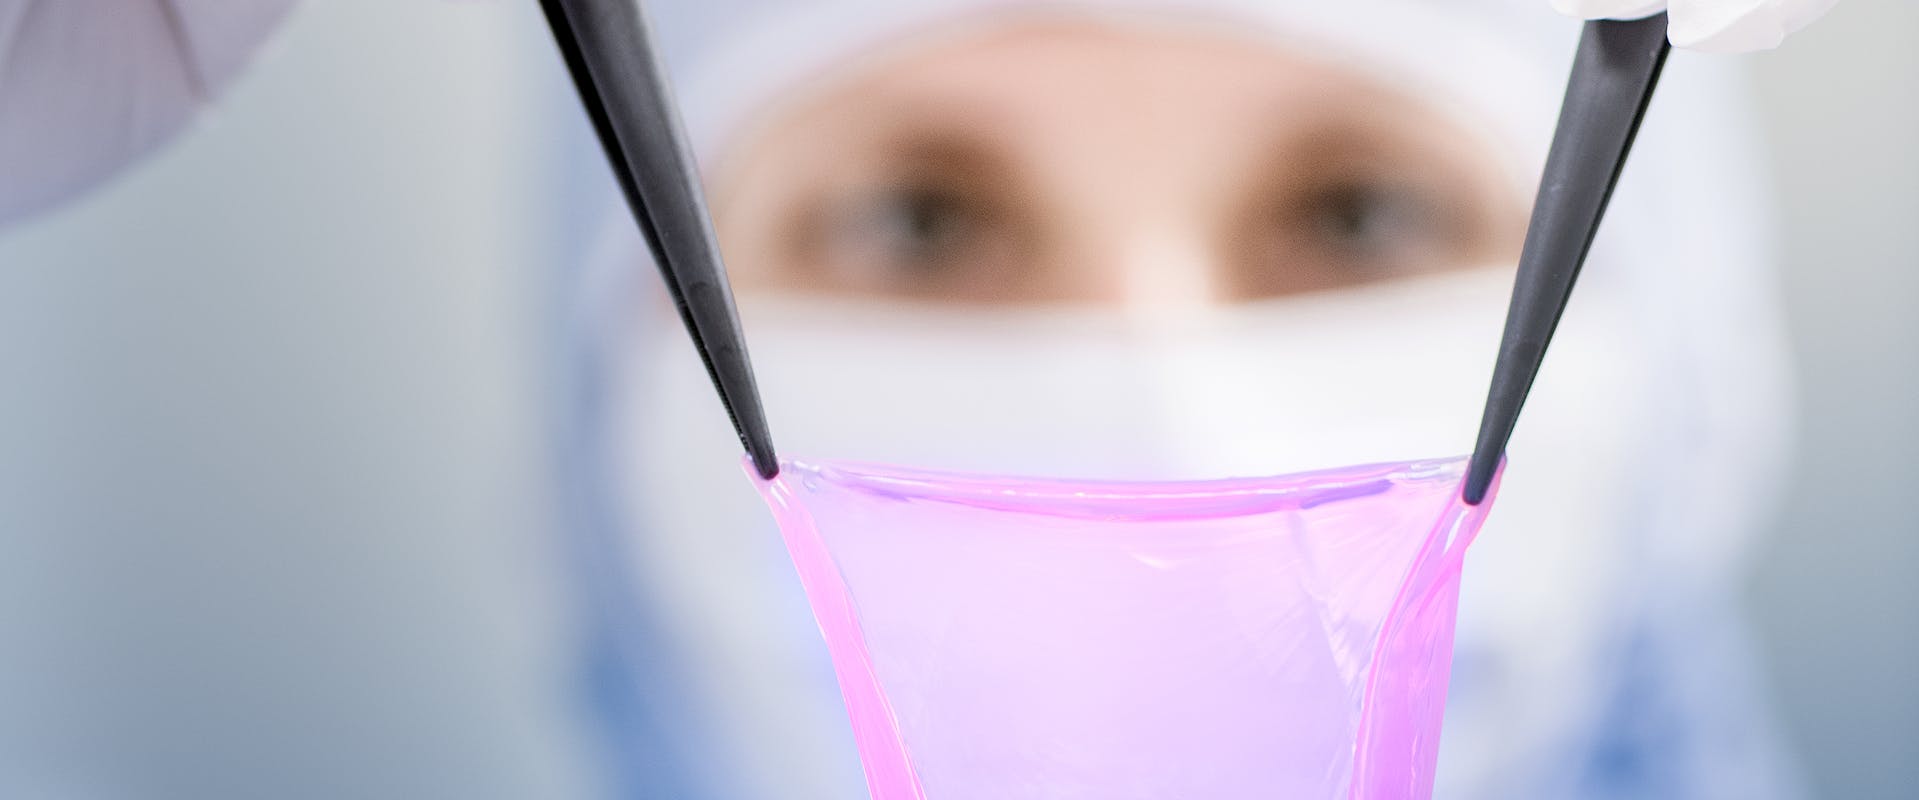 CUTISS personalized bio-engineered skin graft ready for transplantation